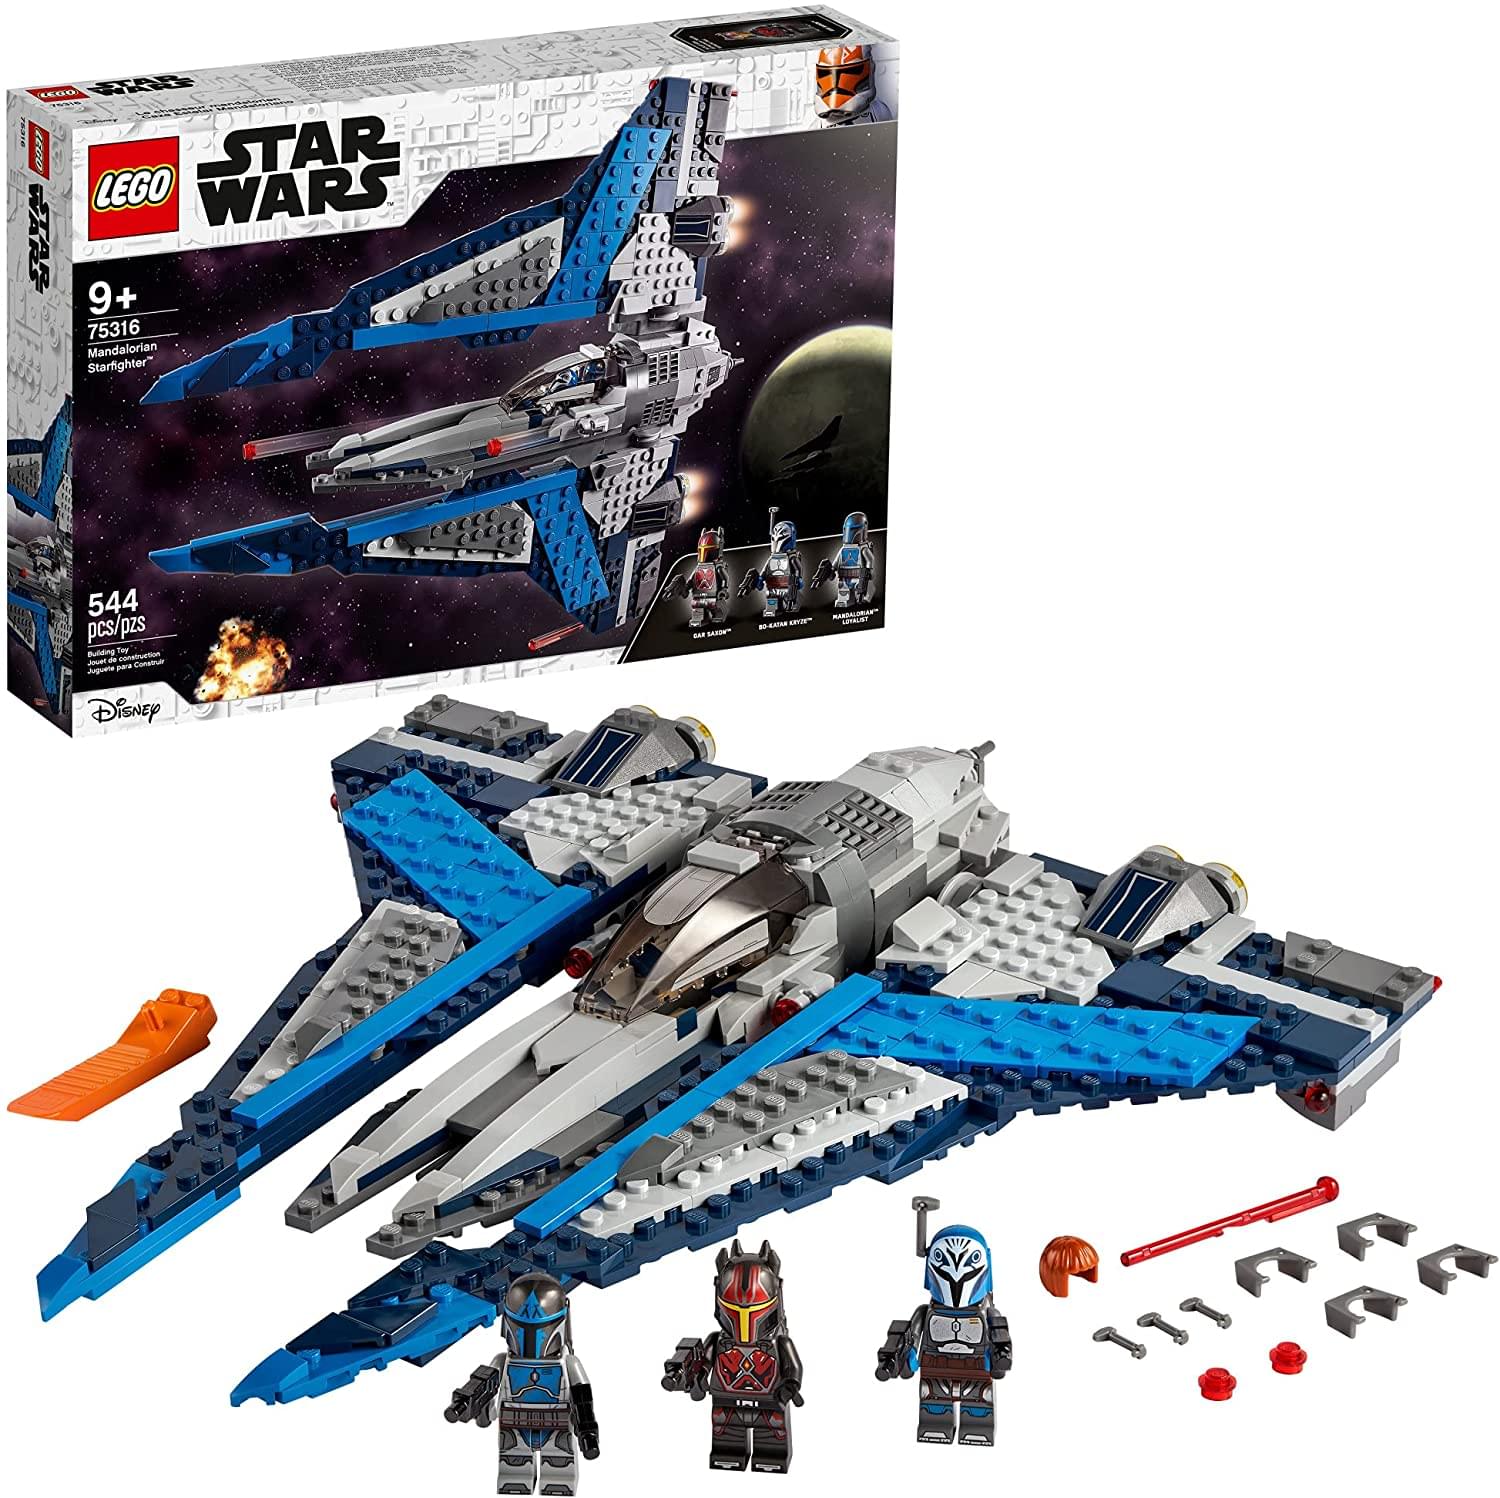 LEGO Star Wars 75316 Mandalorian Starfighter 544 Piece Building Kit